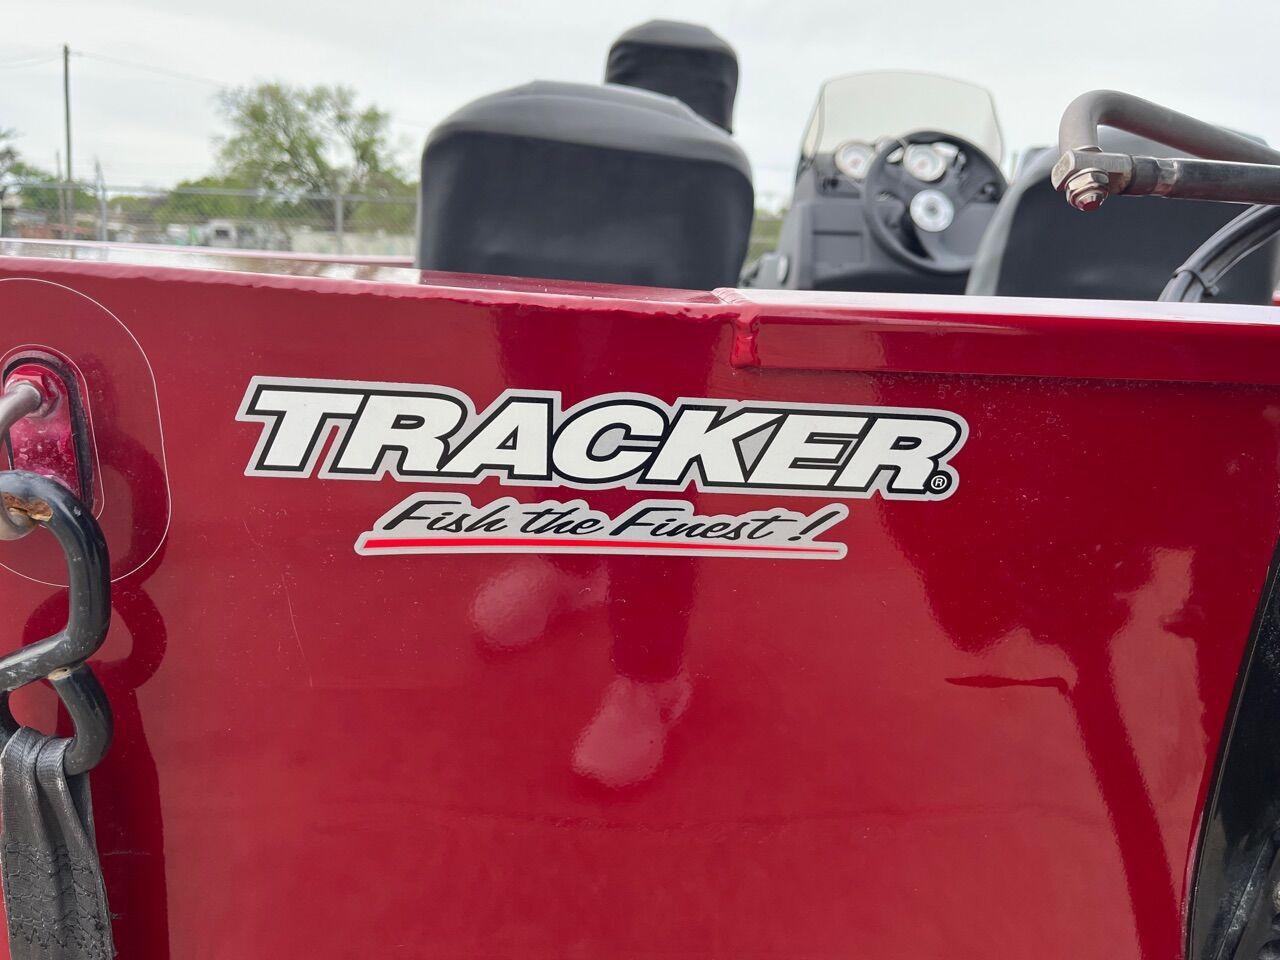 2022 Tracker Pro 170